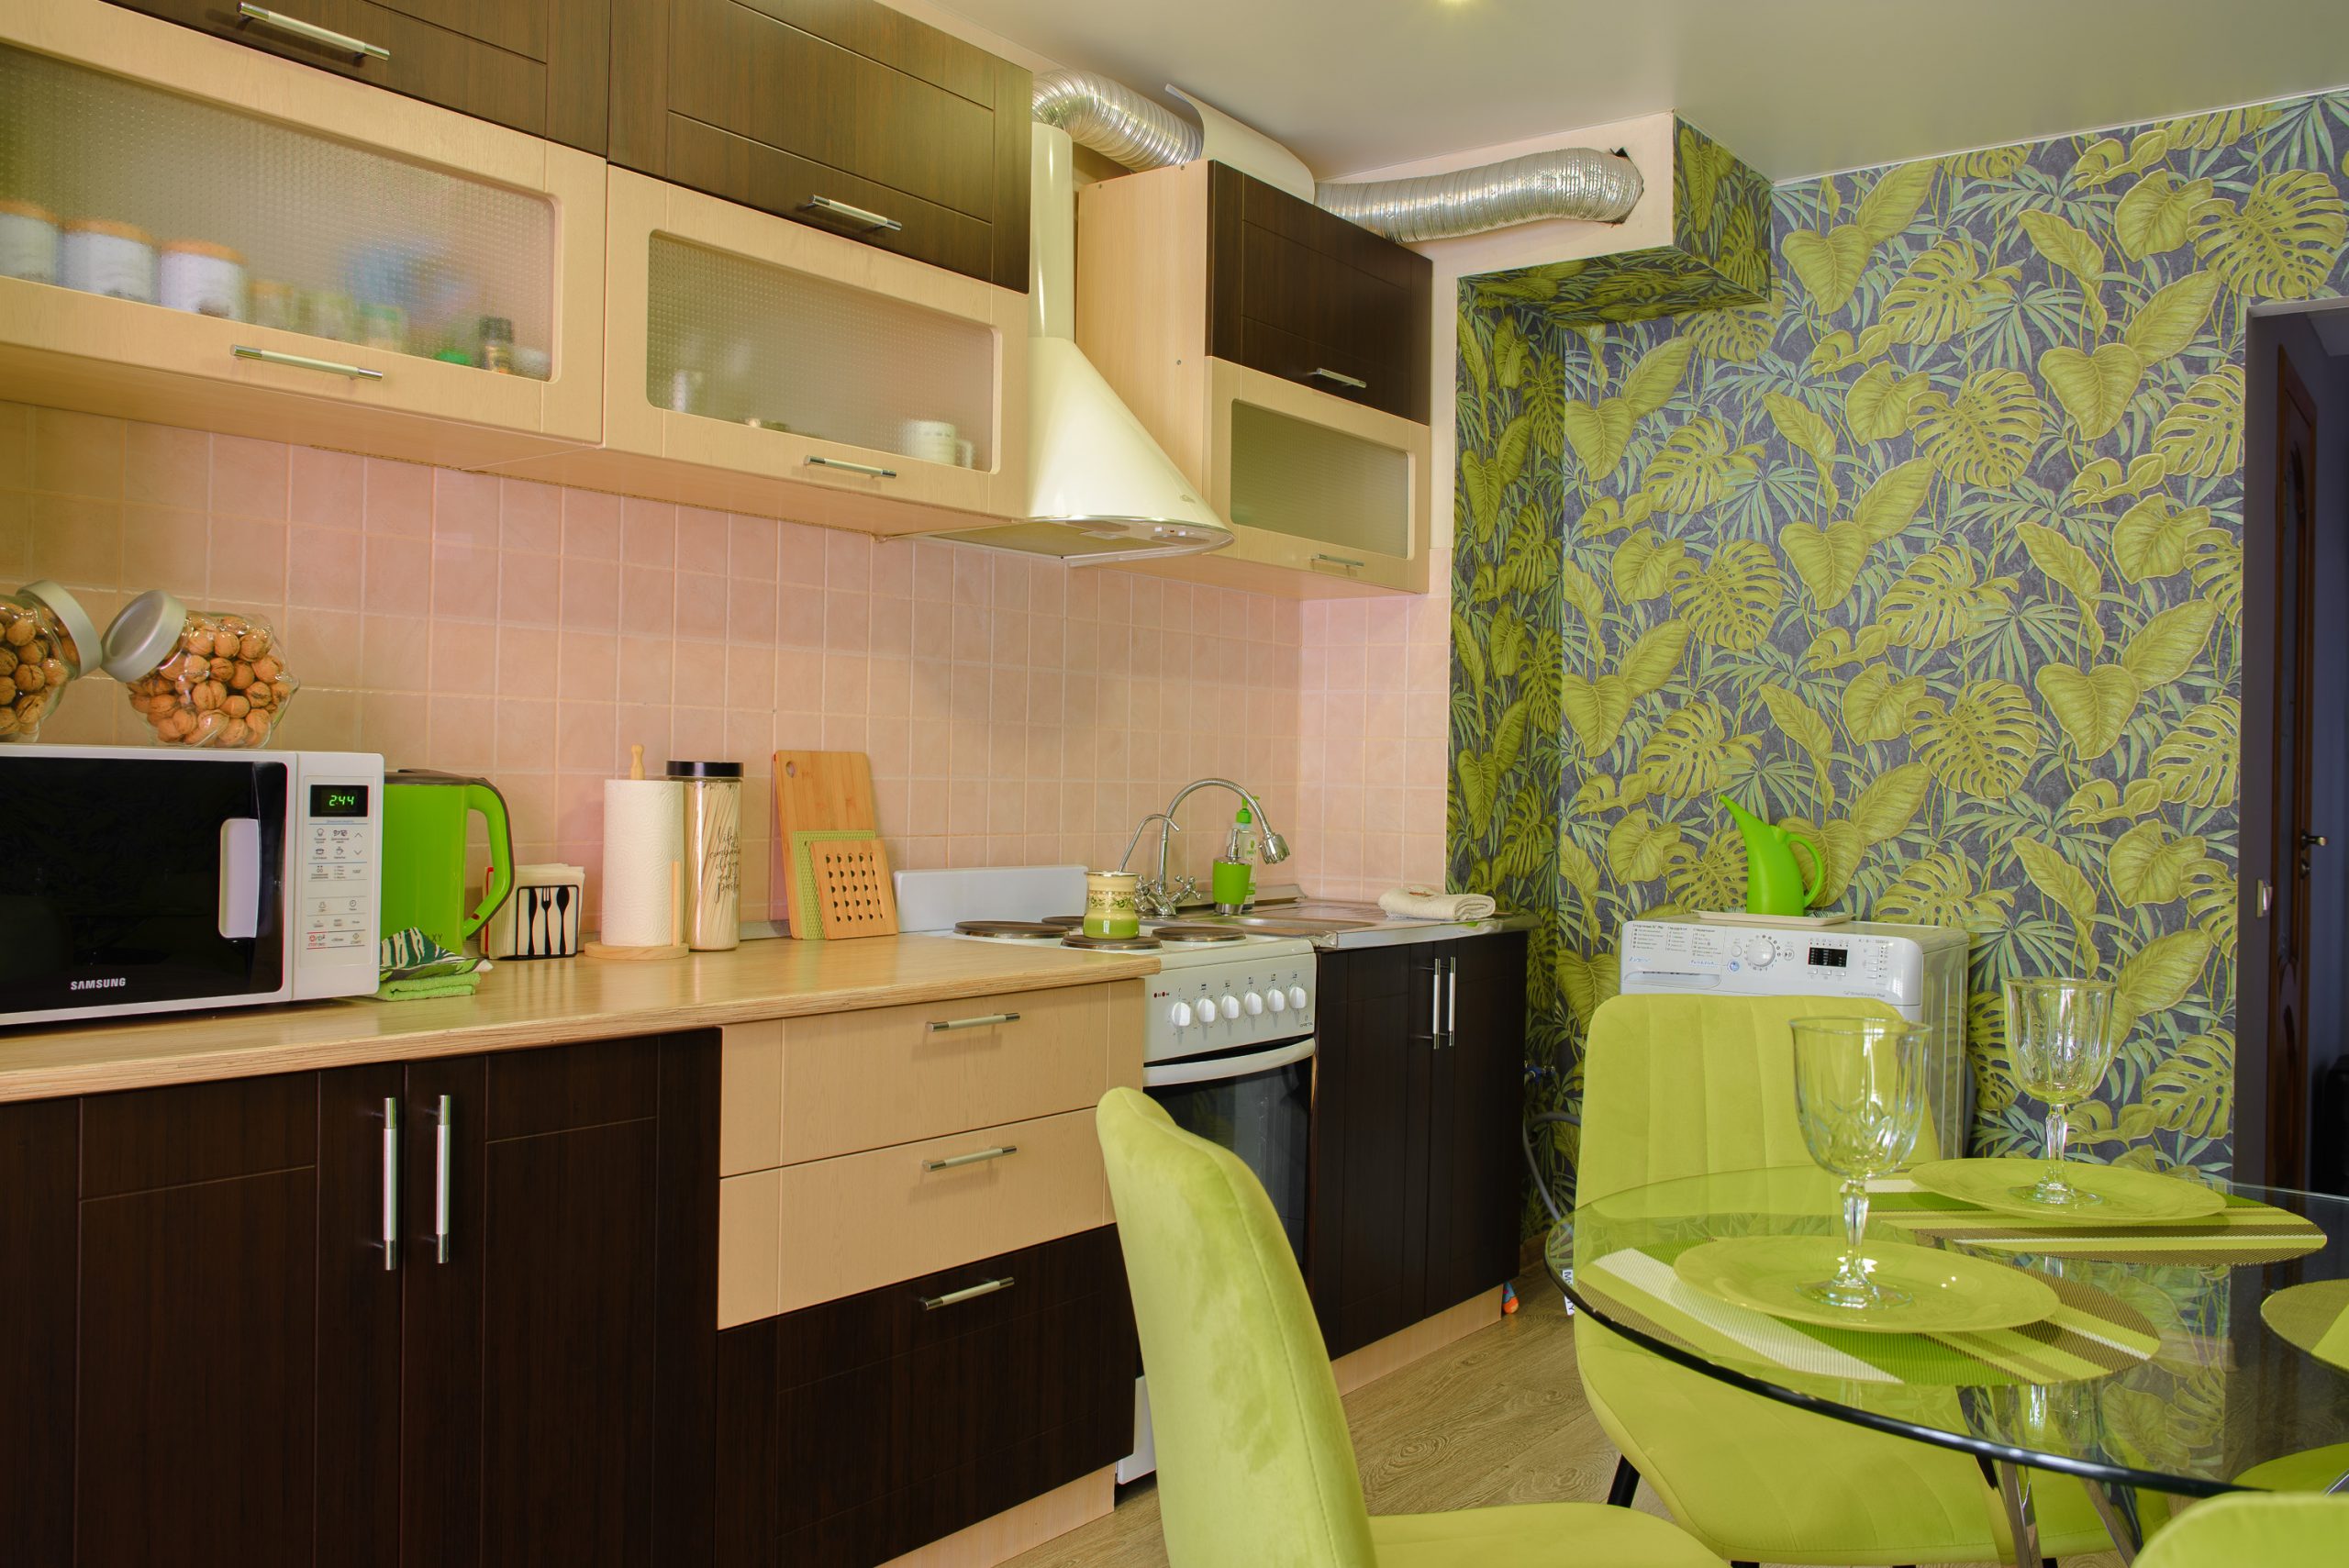 Однокомнатная квартира на ул. Лермонтова 121 (45кв.м)до 3 гостей